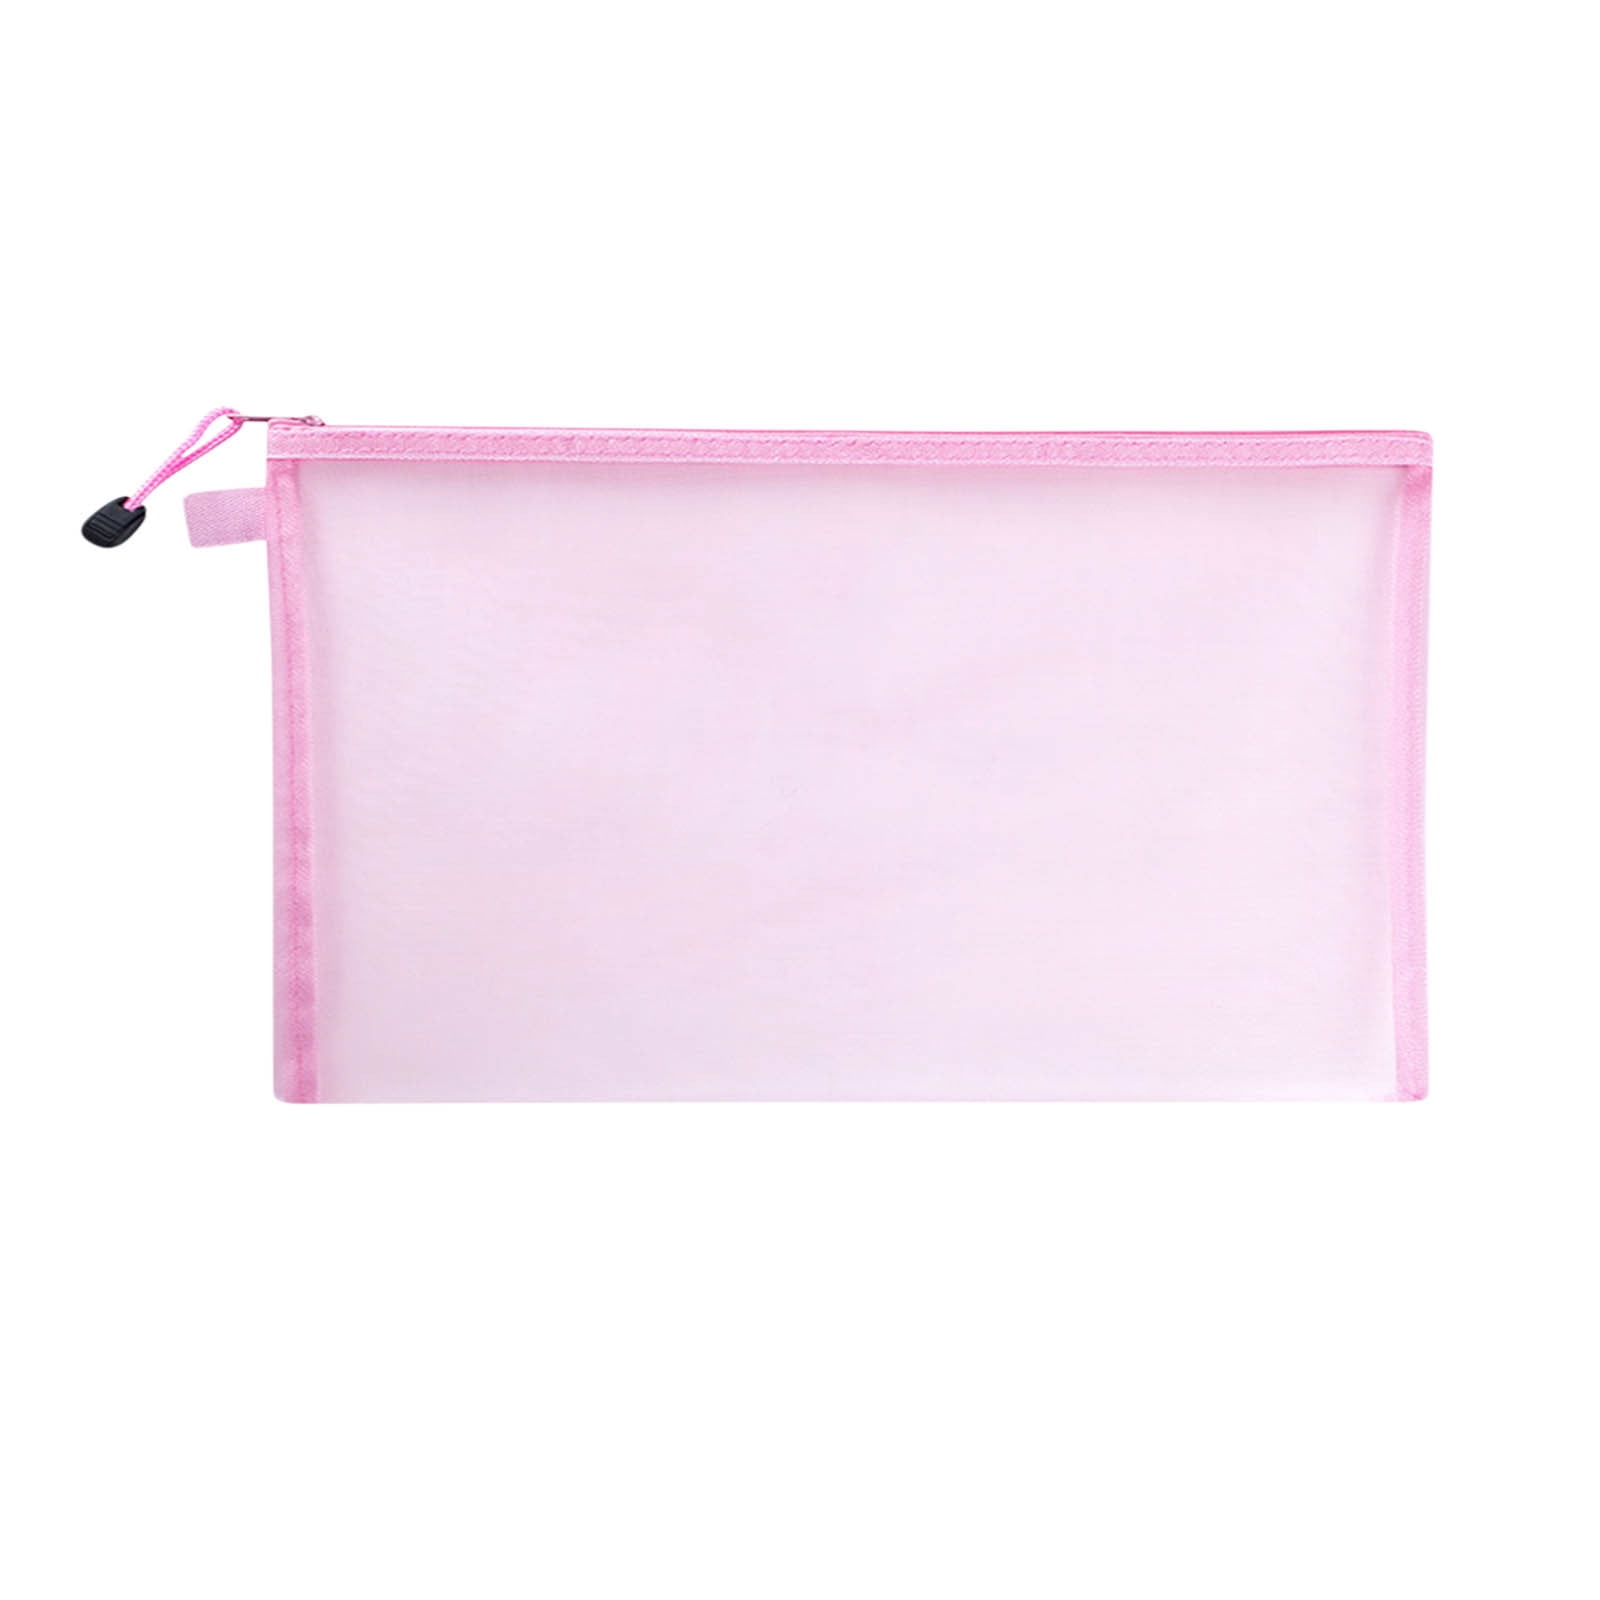 Cofest Blank Canvas Zipper Pouch for DIY CraftCanvas Makeup Bags with Canvas Cosmetic Bag Multi-Purpose Travel Bags Pen Pencil Case White, Size: 7.87